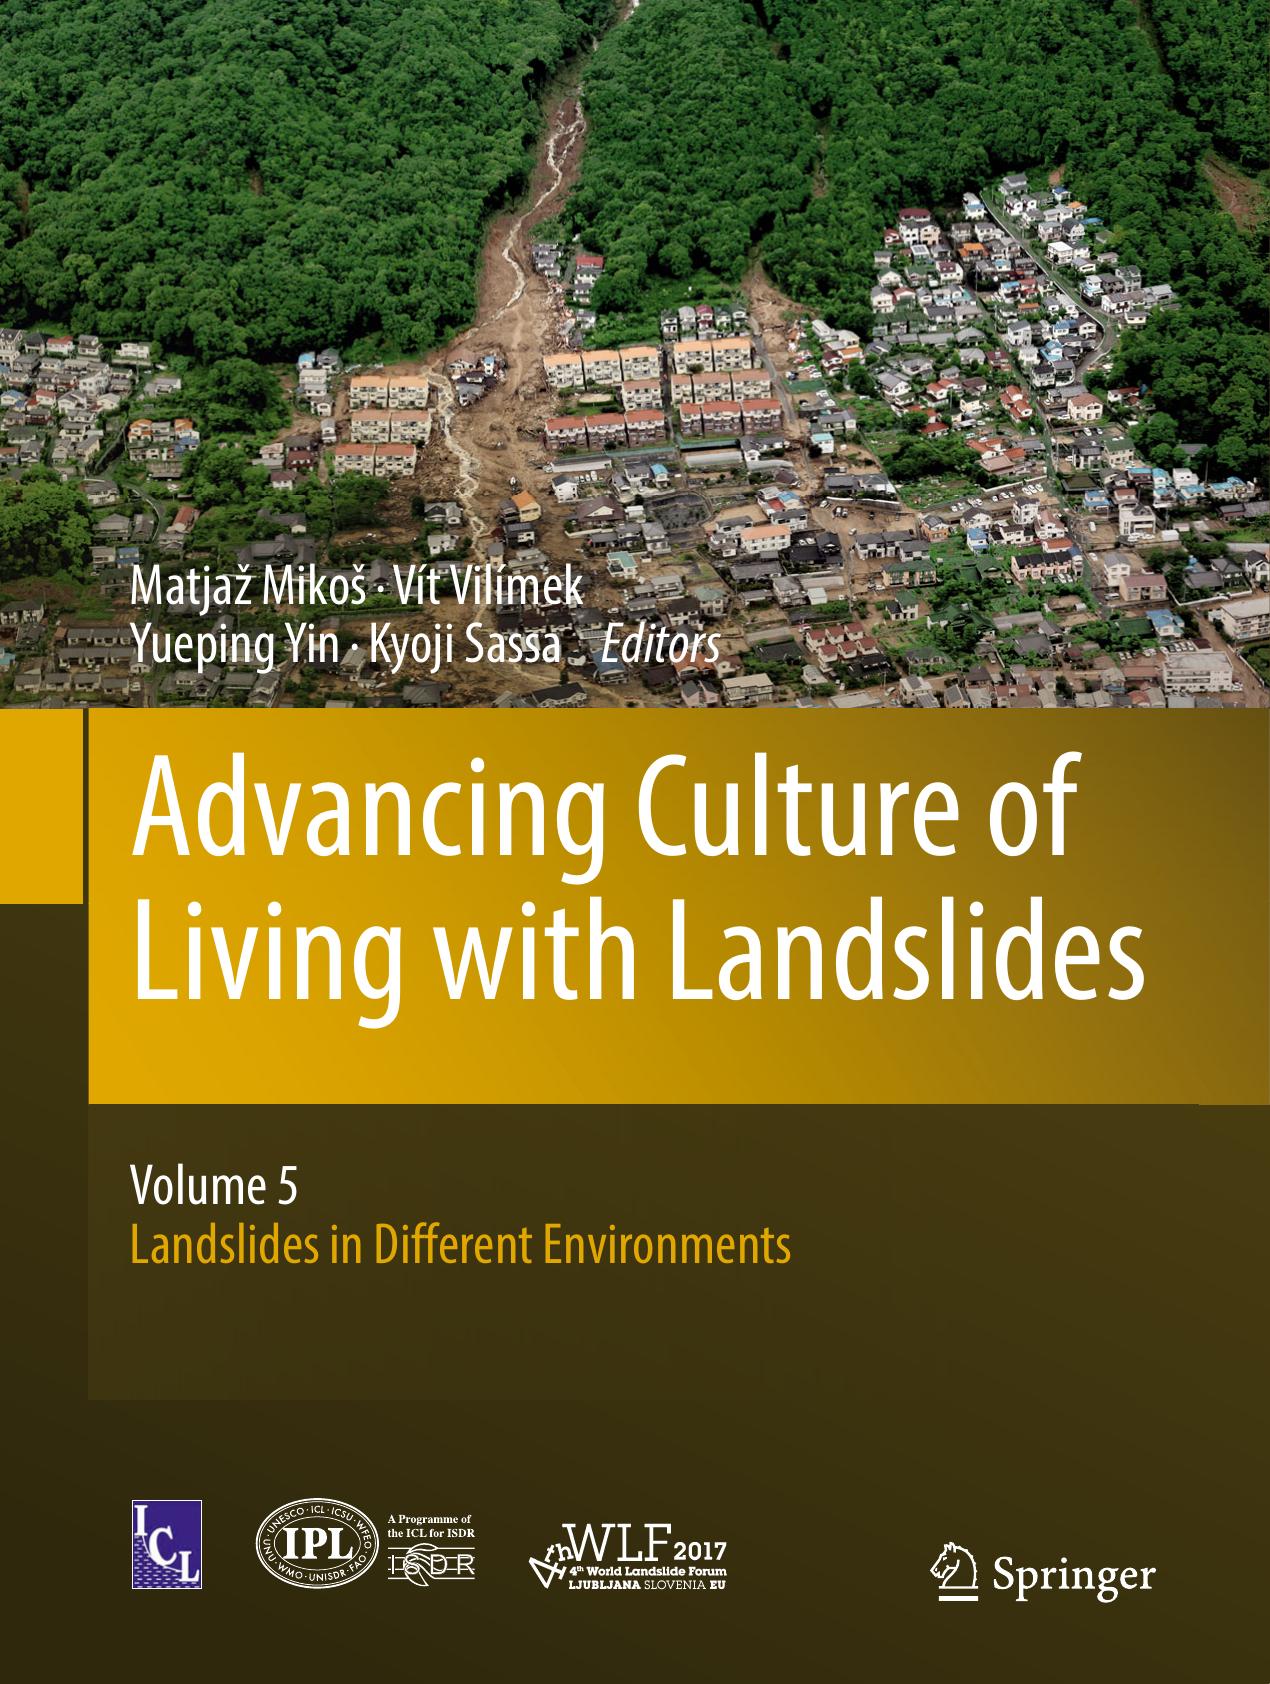 Advancing Culture of Living with Landslides Volume 5 Landslides in Different Environments 2017